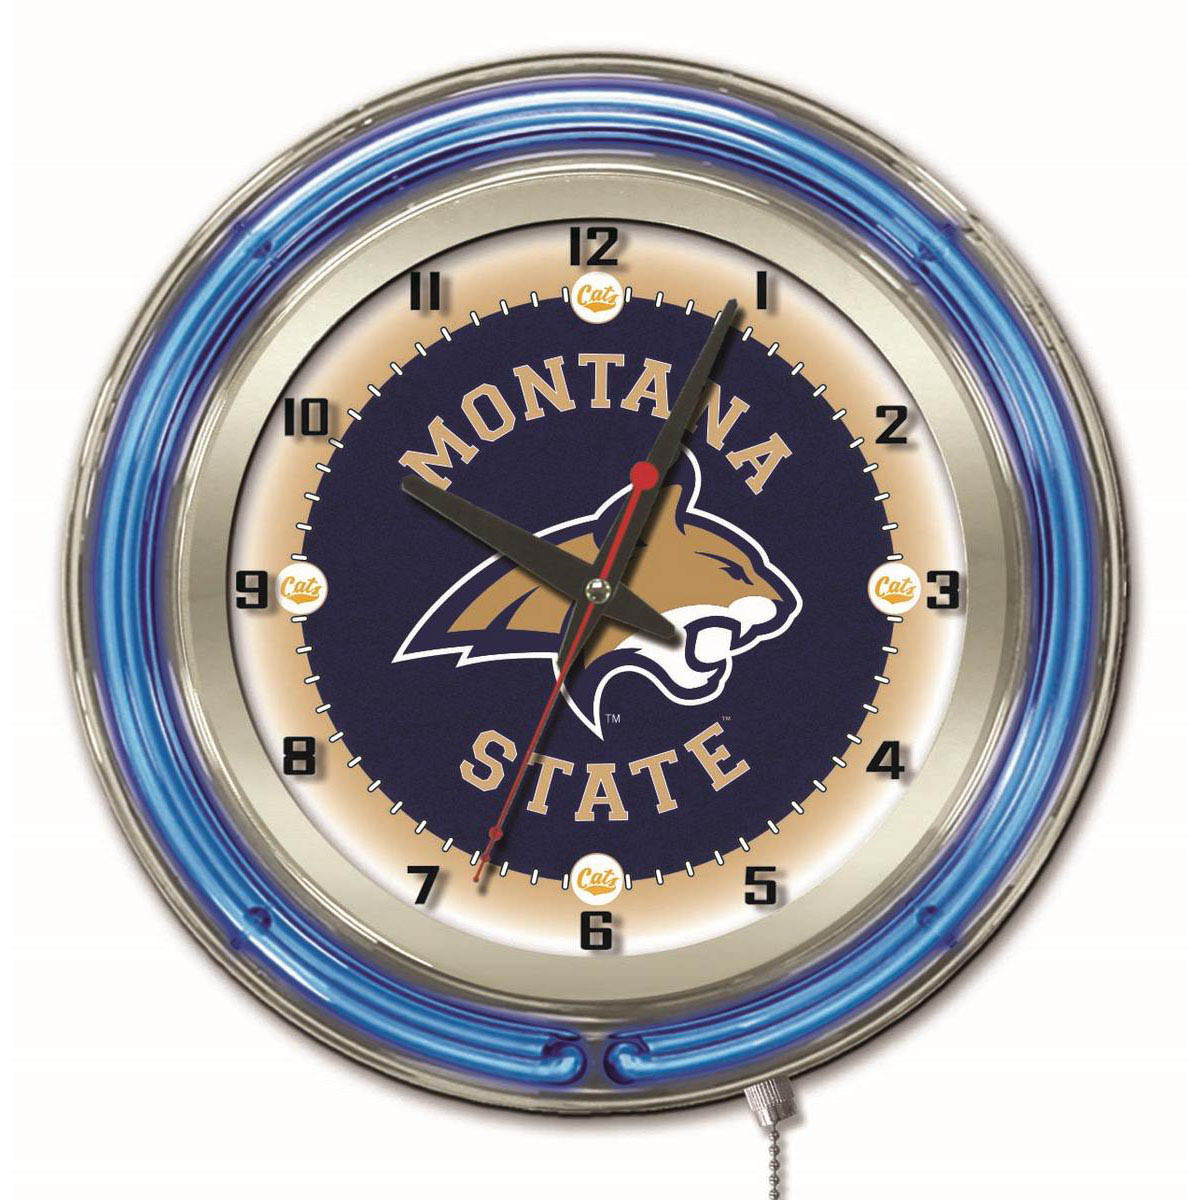 19 Inch Montana State Neon Clock